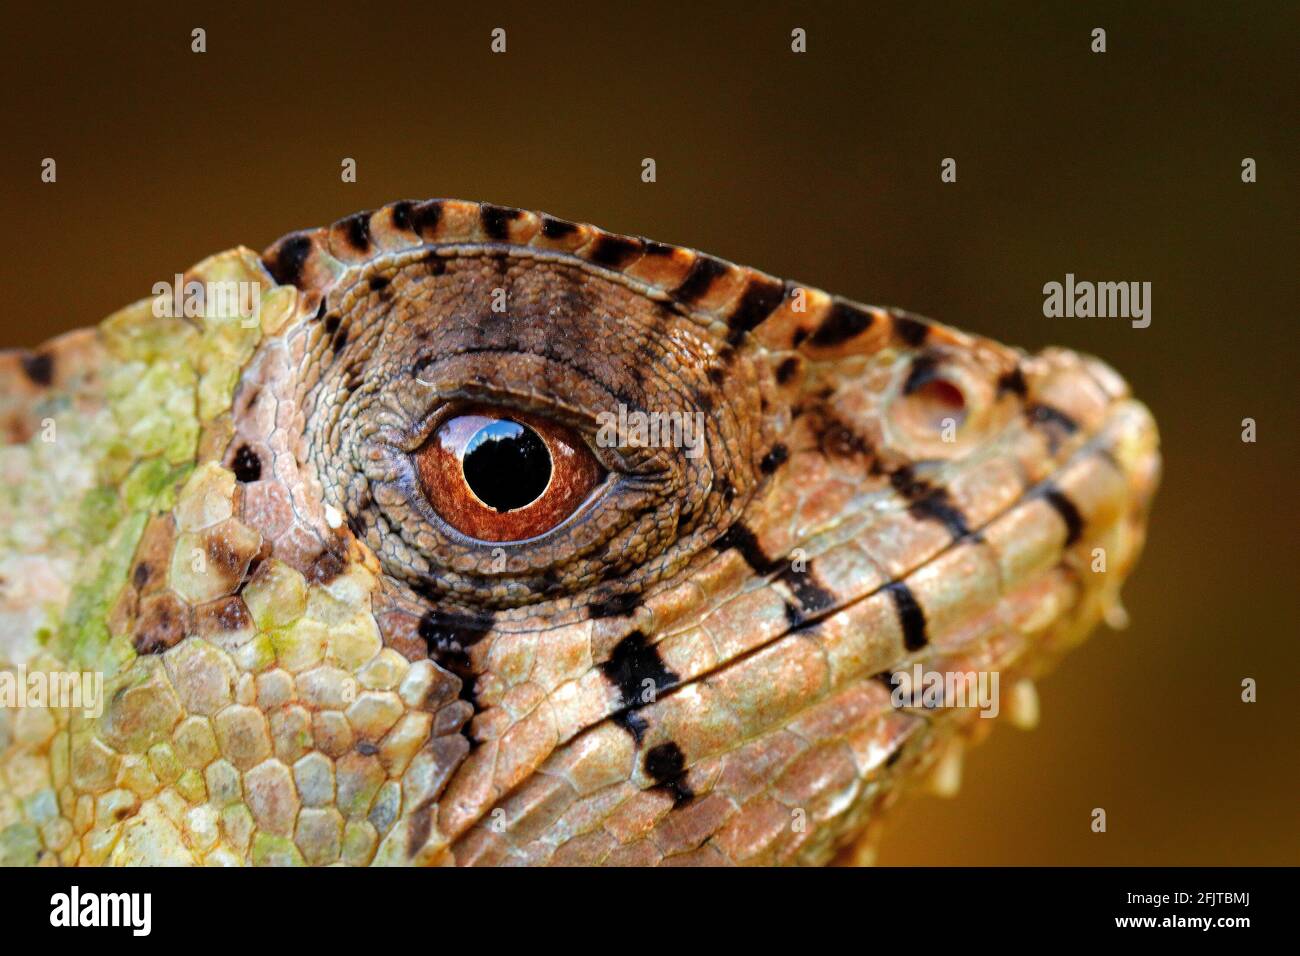 Detail Helmeted basilisk iguana, Corytophanes cristatus, close-up eye. Lizard in the nature habitat, green forest vegetation. Beautiful reptile with l Stock Photo